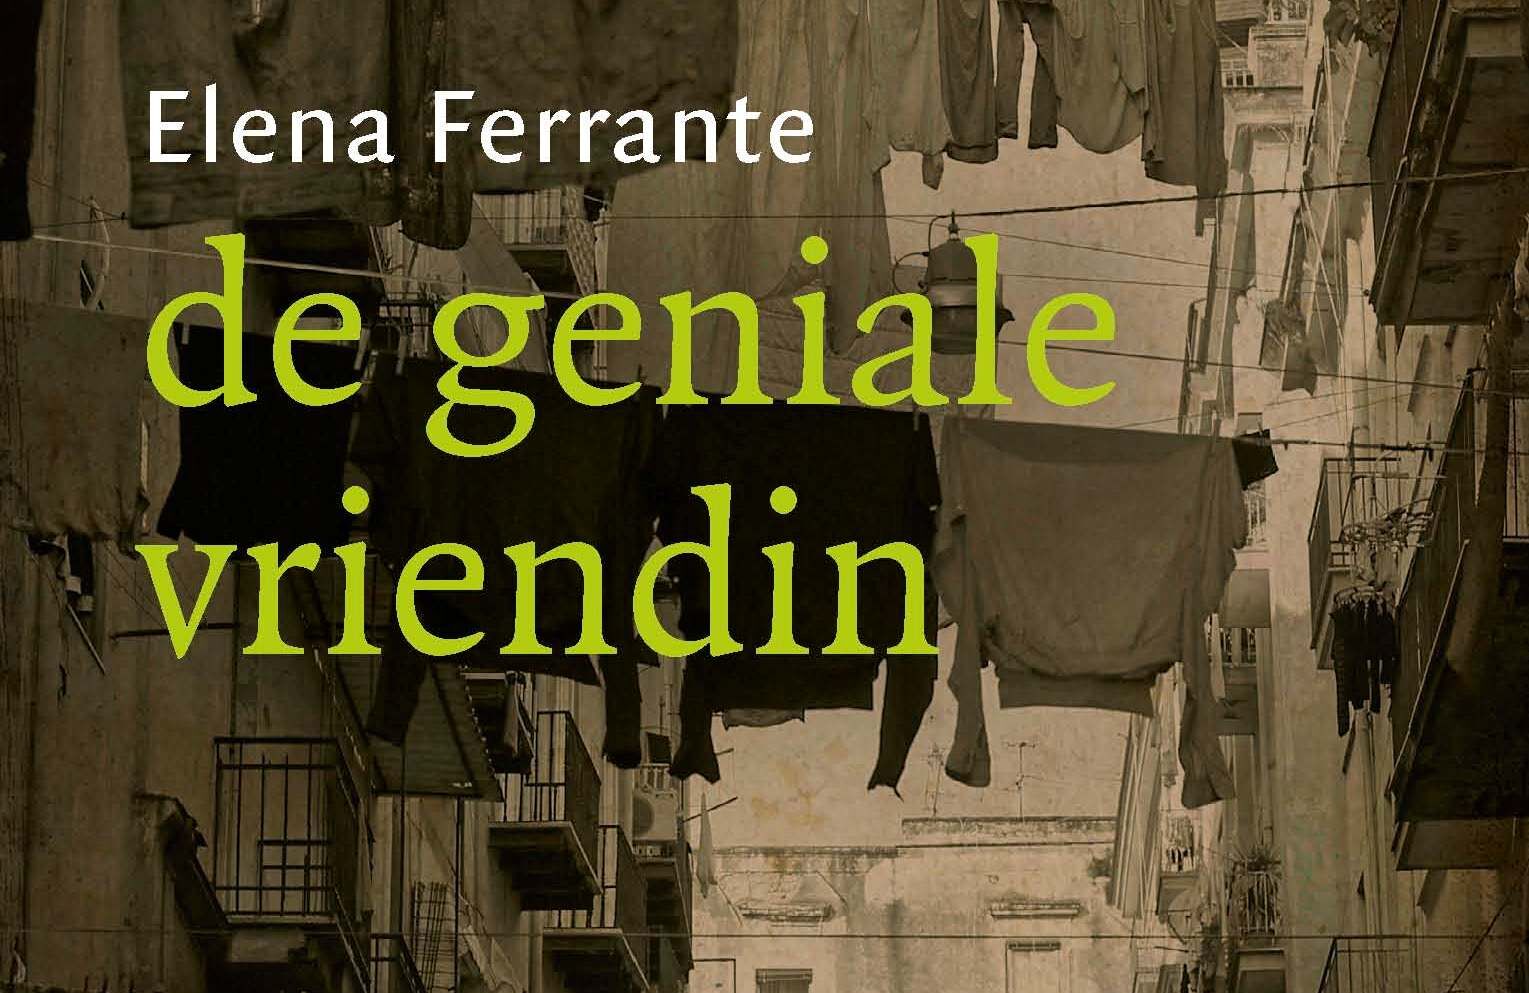 Elena Ferrante’s De geniale vriendin